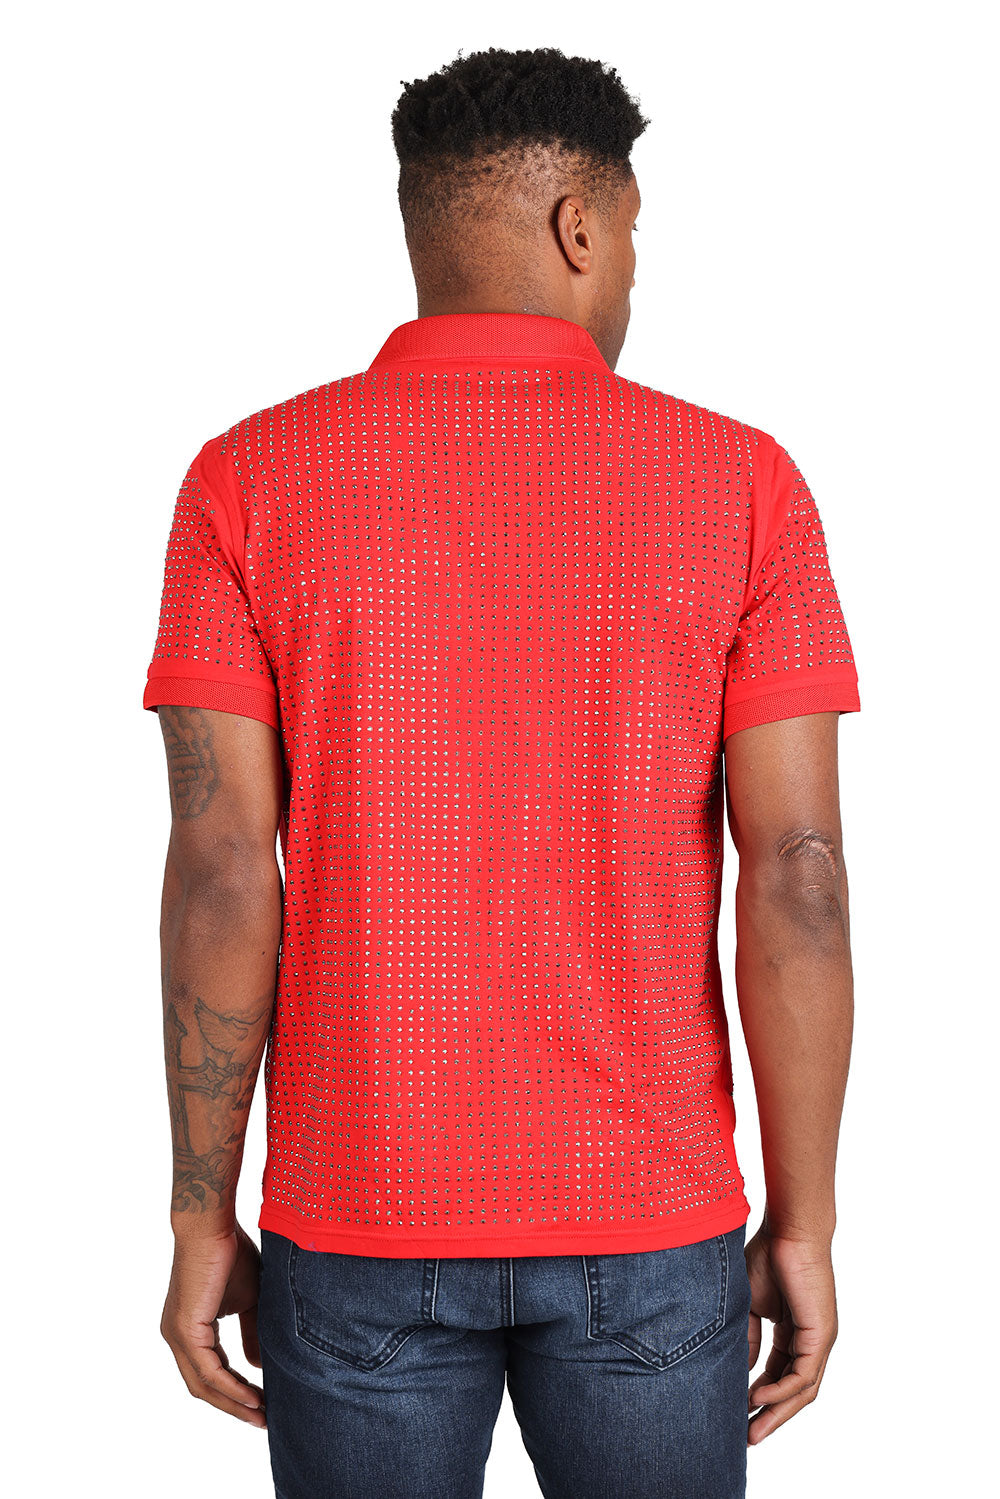 Barabas Men's Punk Rivet Studded Short Sleeve Shirts 2PS932Barabas Men's Punk Rivet Studded Short Sleeve Shirts 2PS932 Red and Hematite